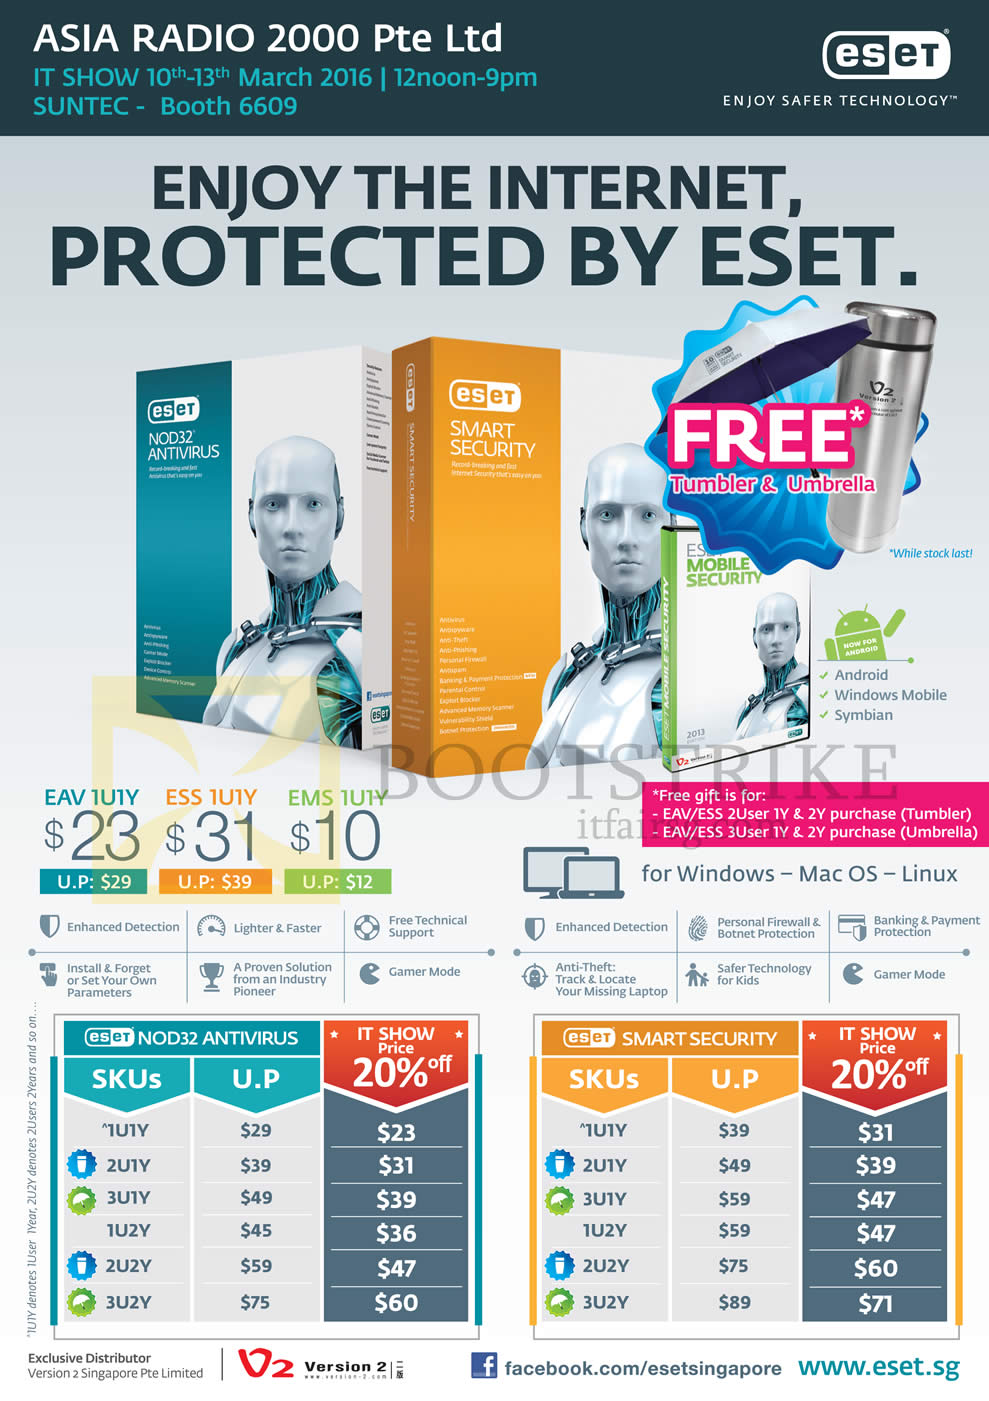 IT SHOW 2016 price list image brochure of Asia Radio ESET Smart Security, Nod32 Antivirus